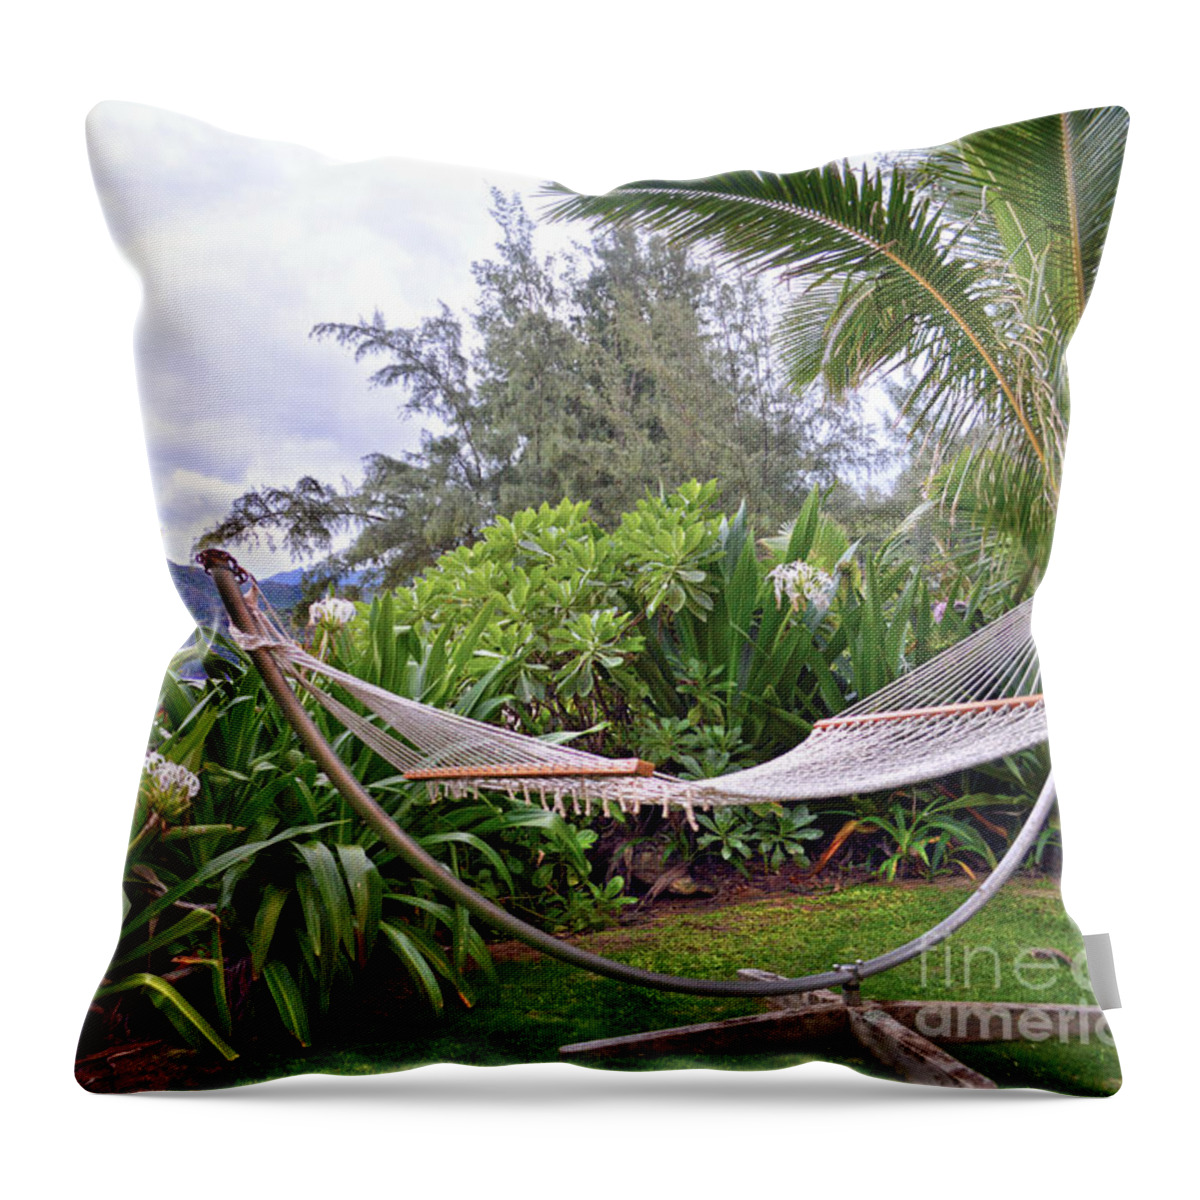 Hammock Throw Pillow featuring the photograph Hawaiian Hammock by Catherine Sherman